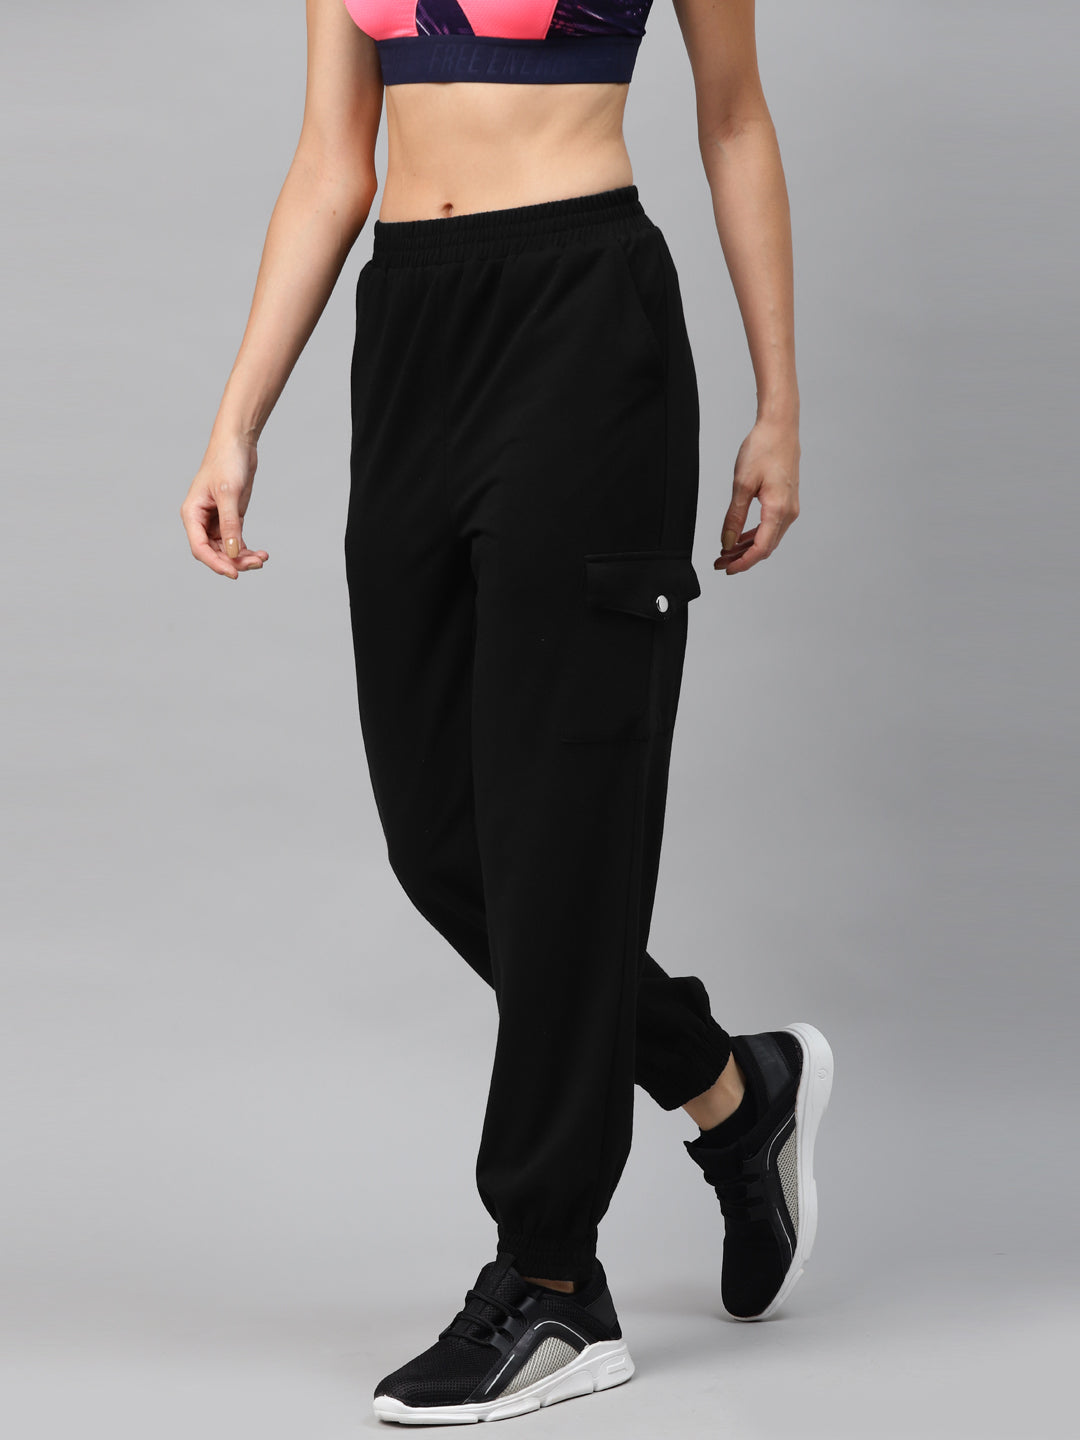 Buy adidas Originals Womens Primeblue Superstar Track Pants (plus Size)  Black/White